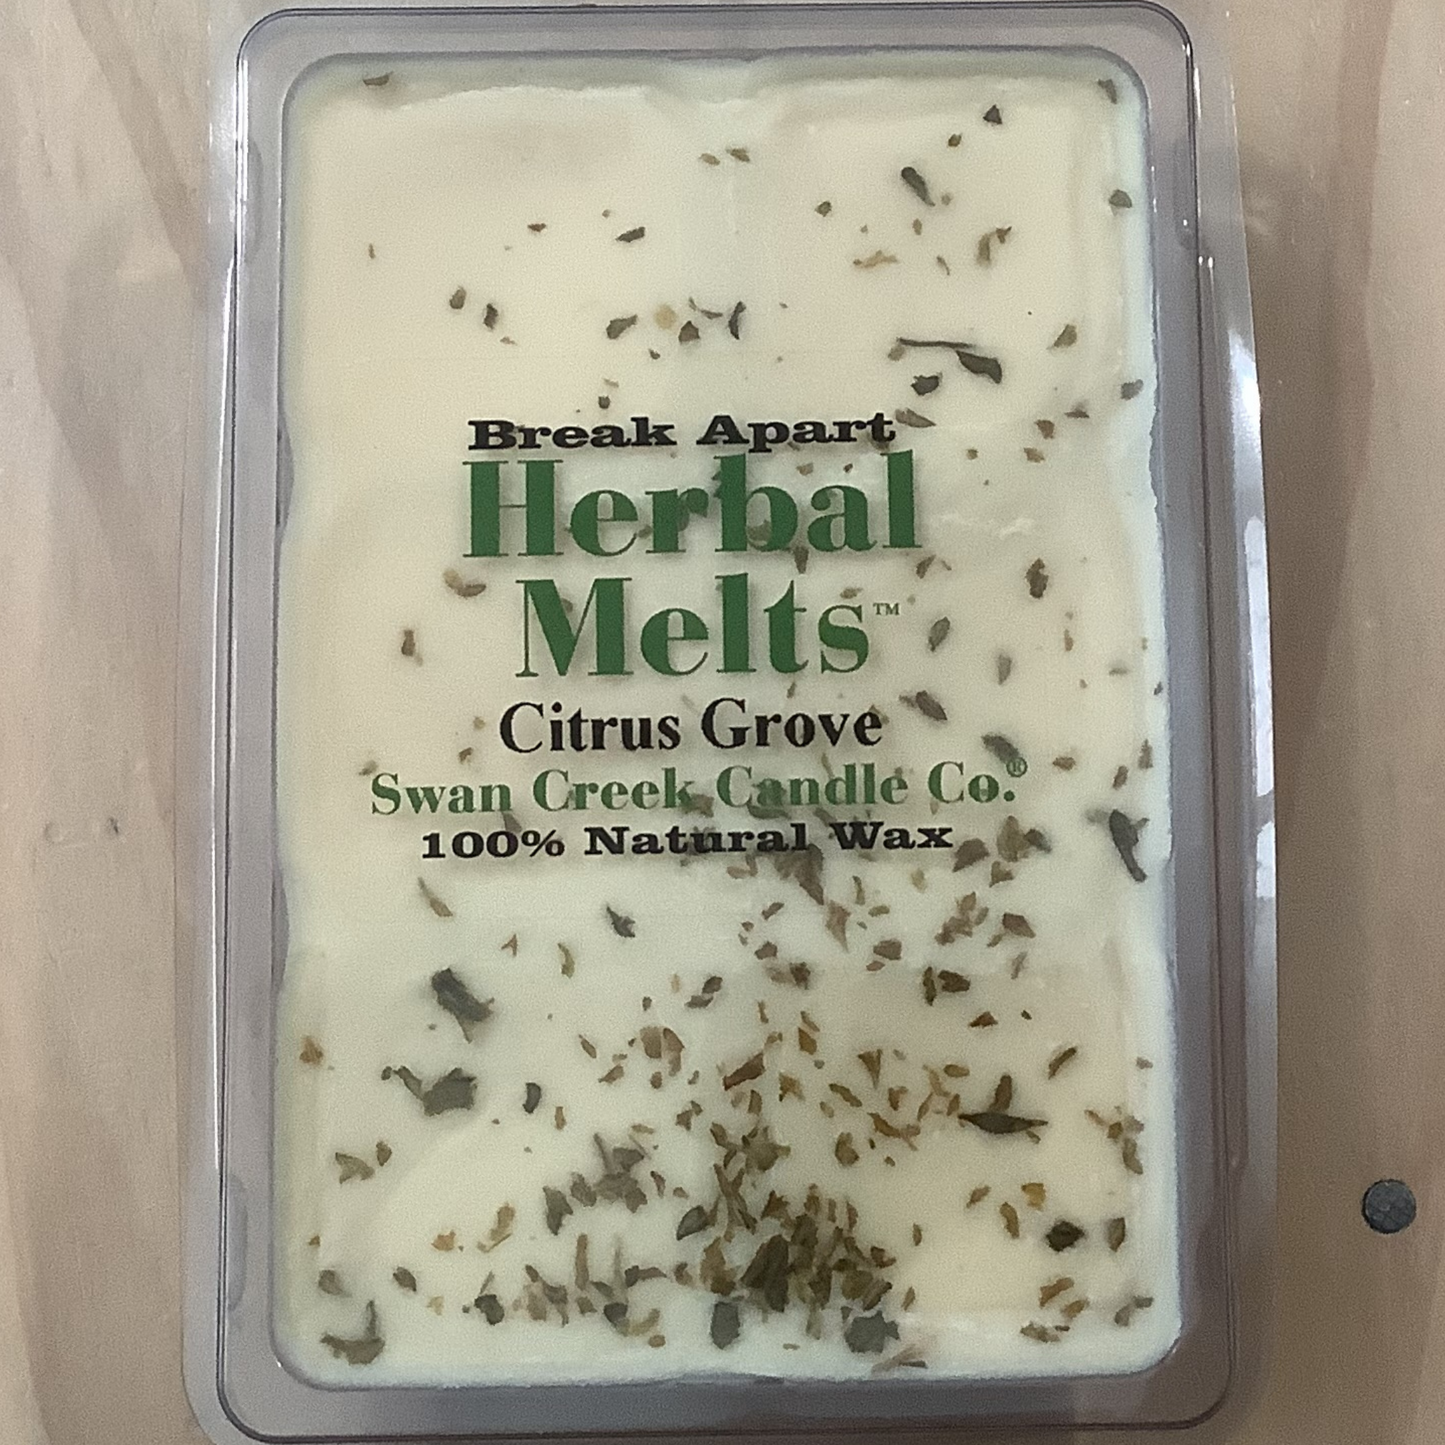 Citrus Grove Herbal Melts